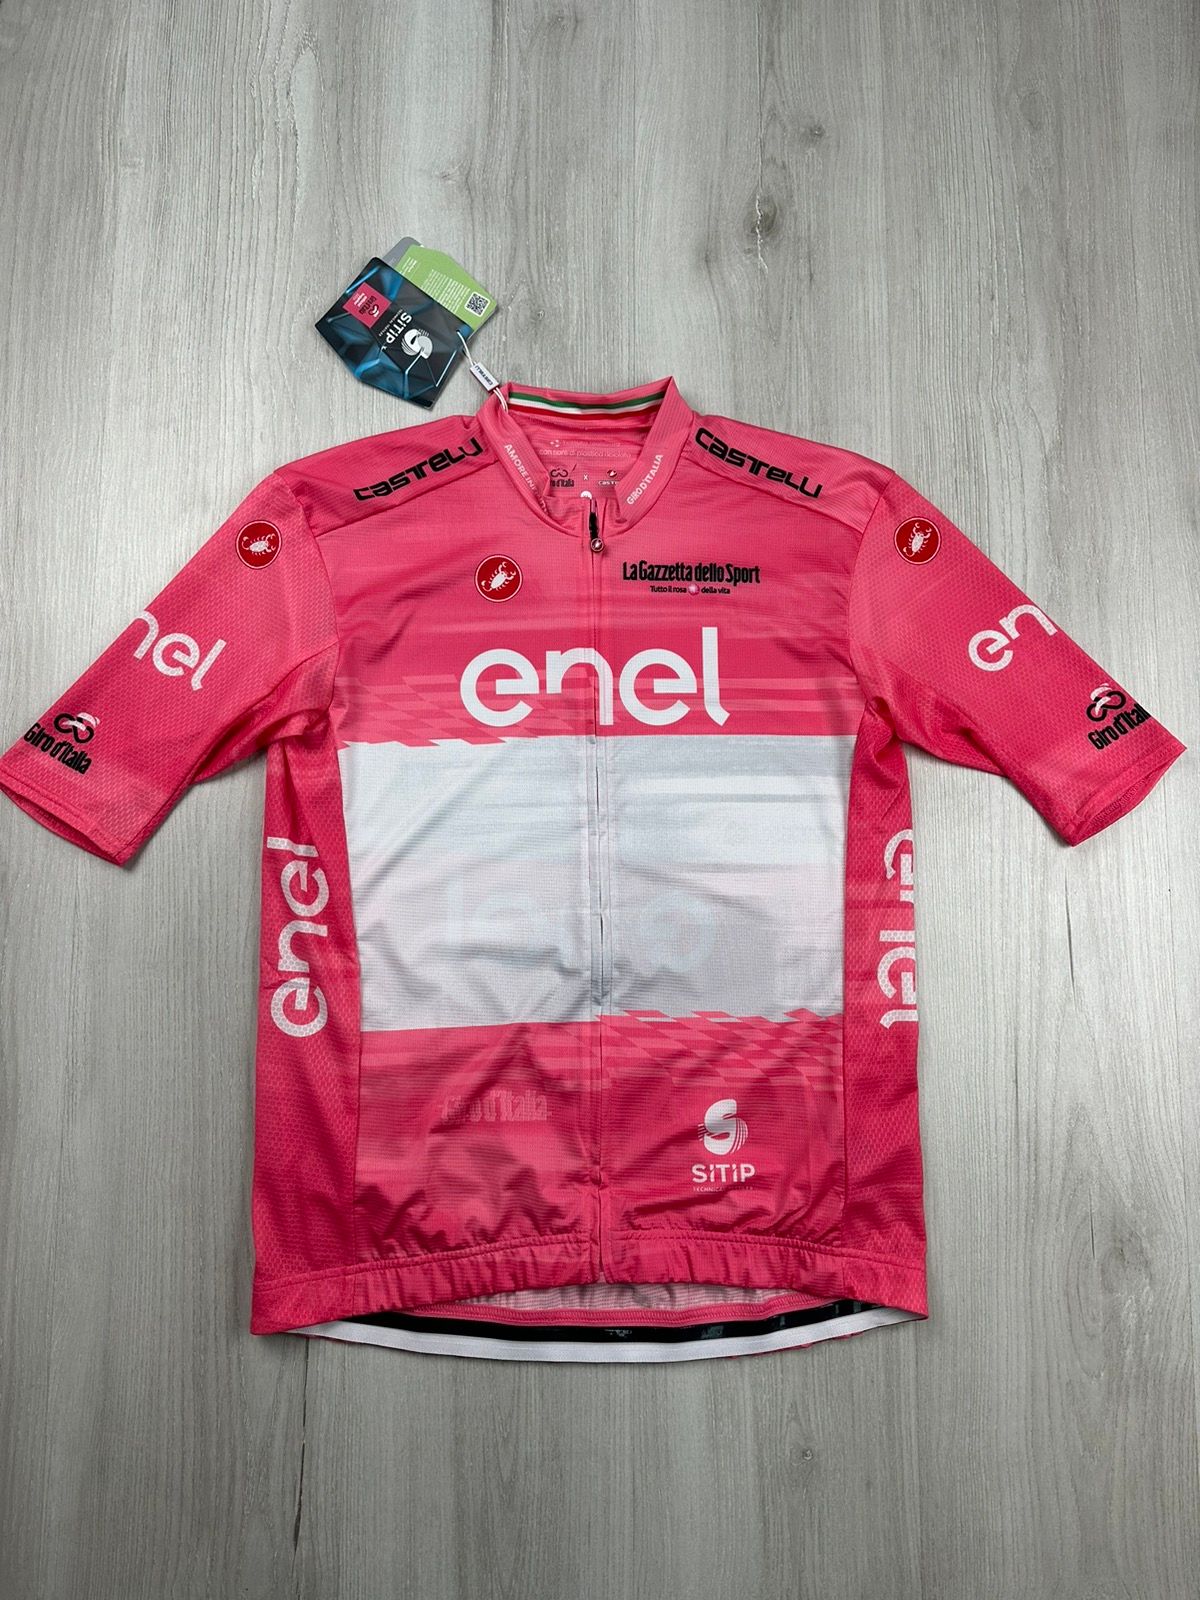 Cycle Castelli x Giro D italia Cycling Shirt Jersey Size US XL / EU 56 / 4 - 1 Preview